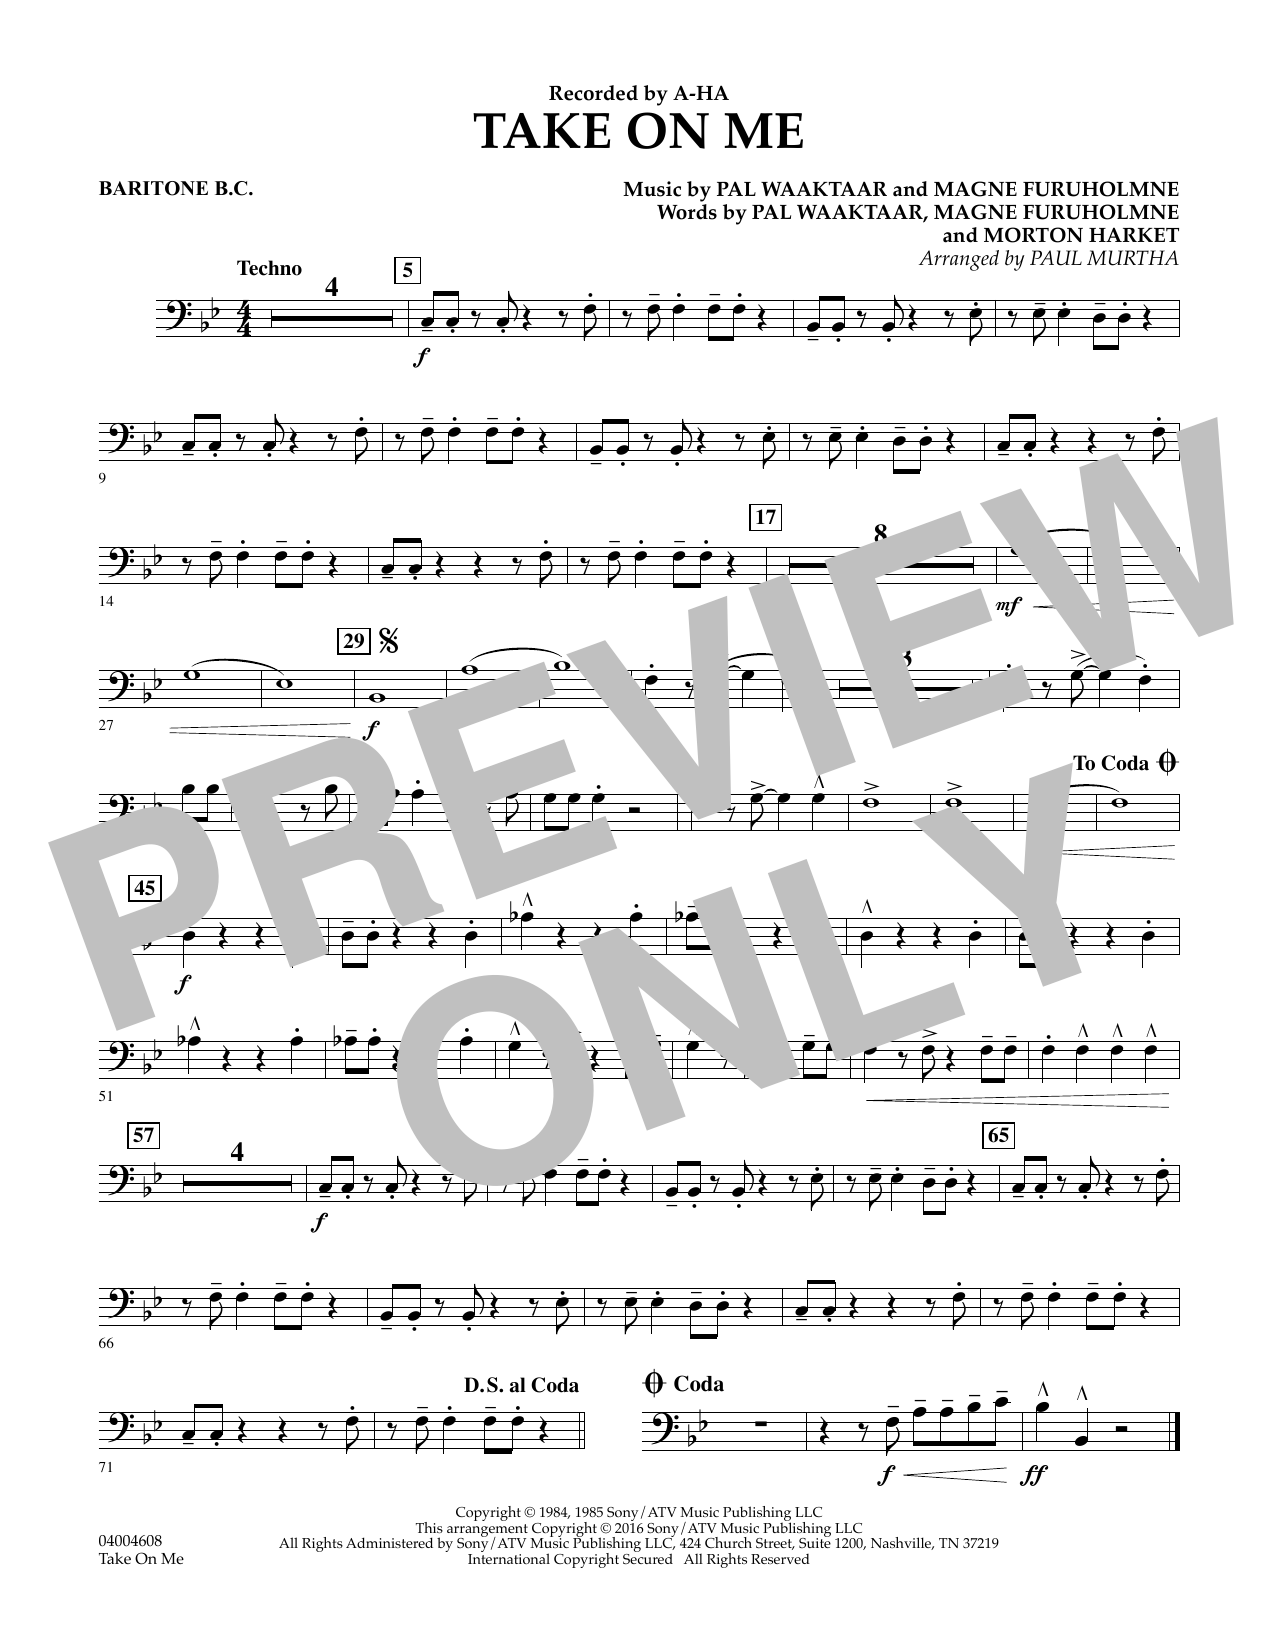 Download Paul Murtha Take on Me - Baritone B.C. Sheet Music